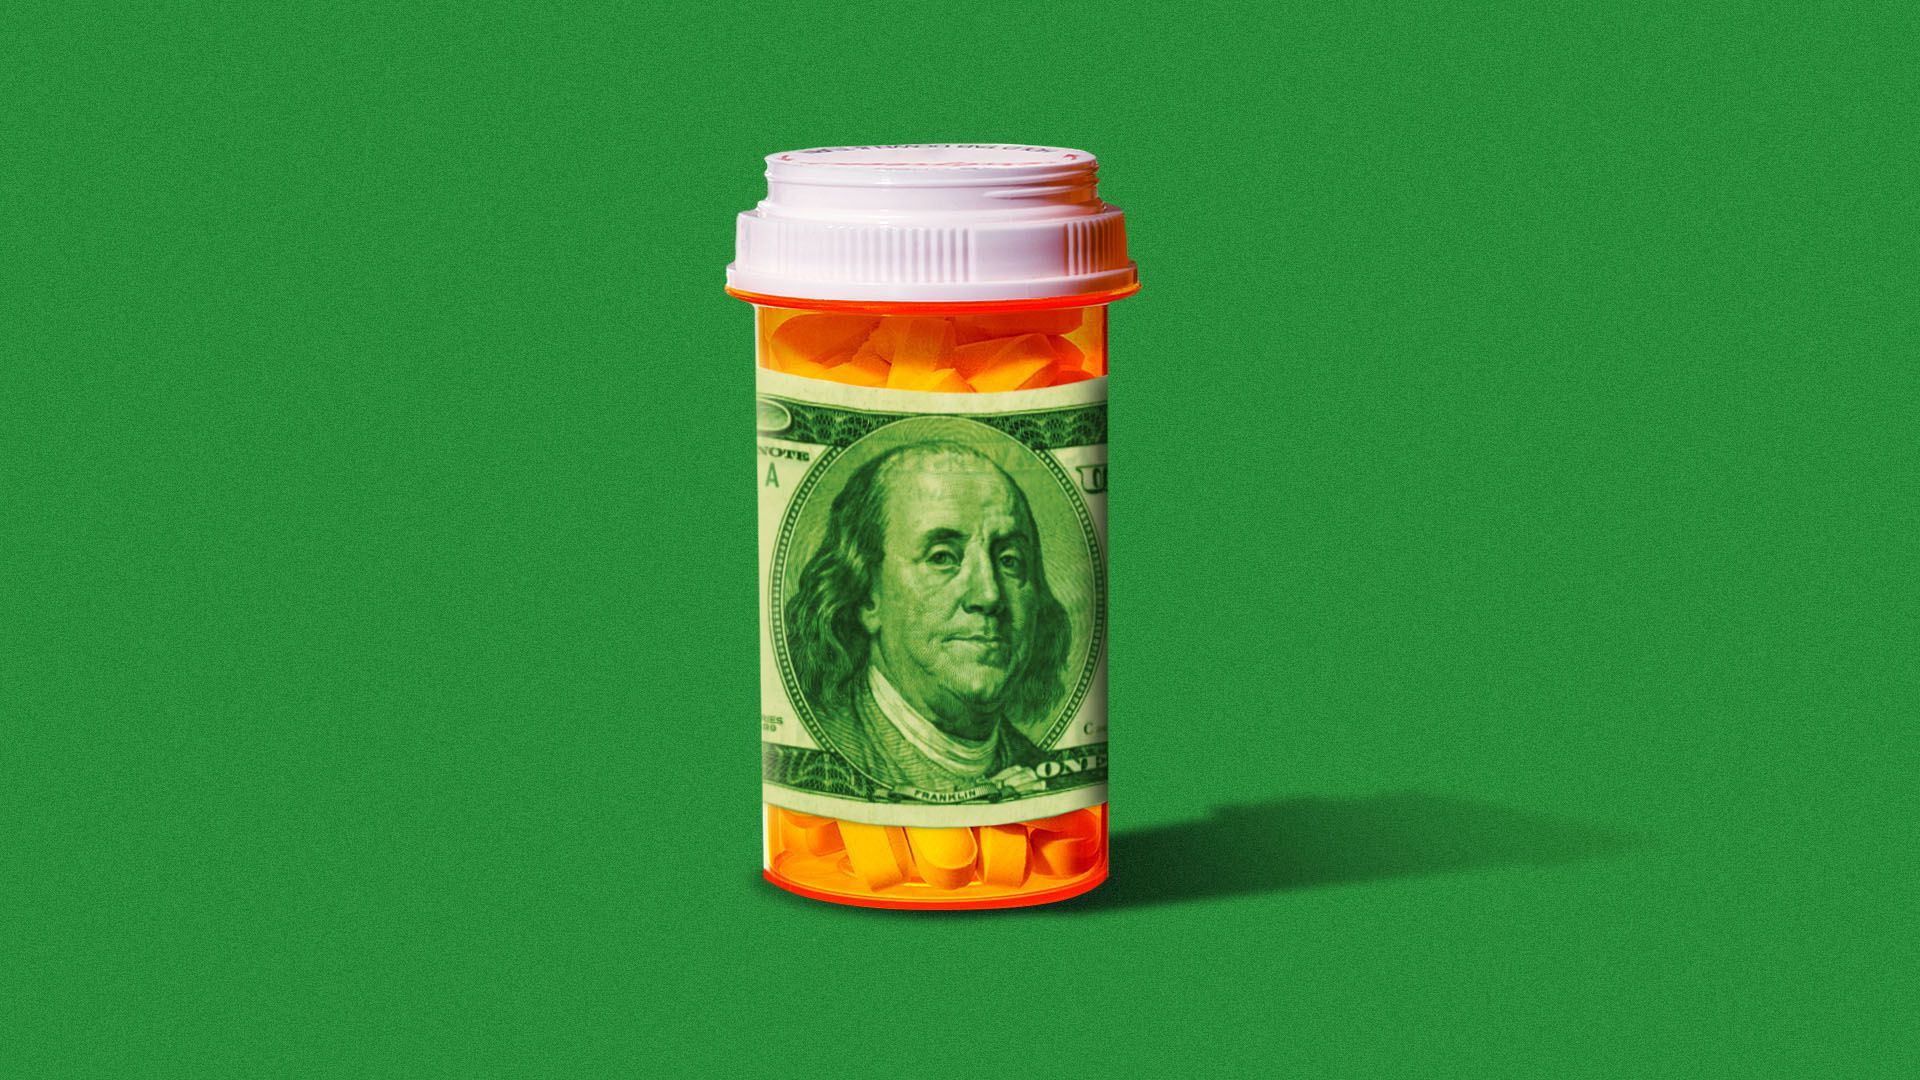 Illustration of a Benjamin in a pill bottle